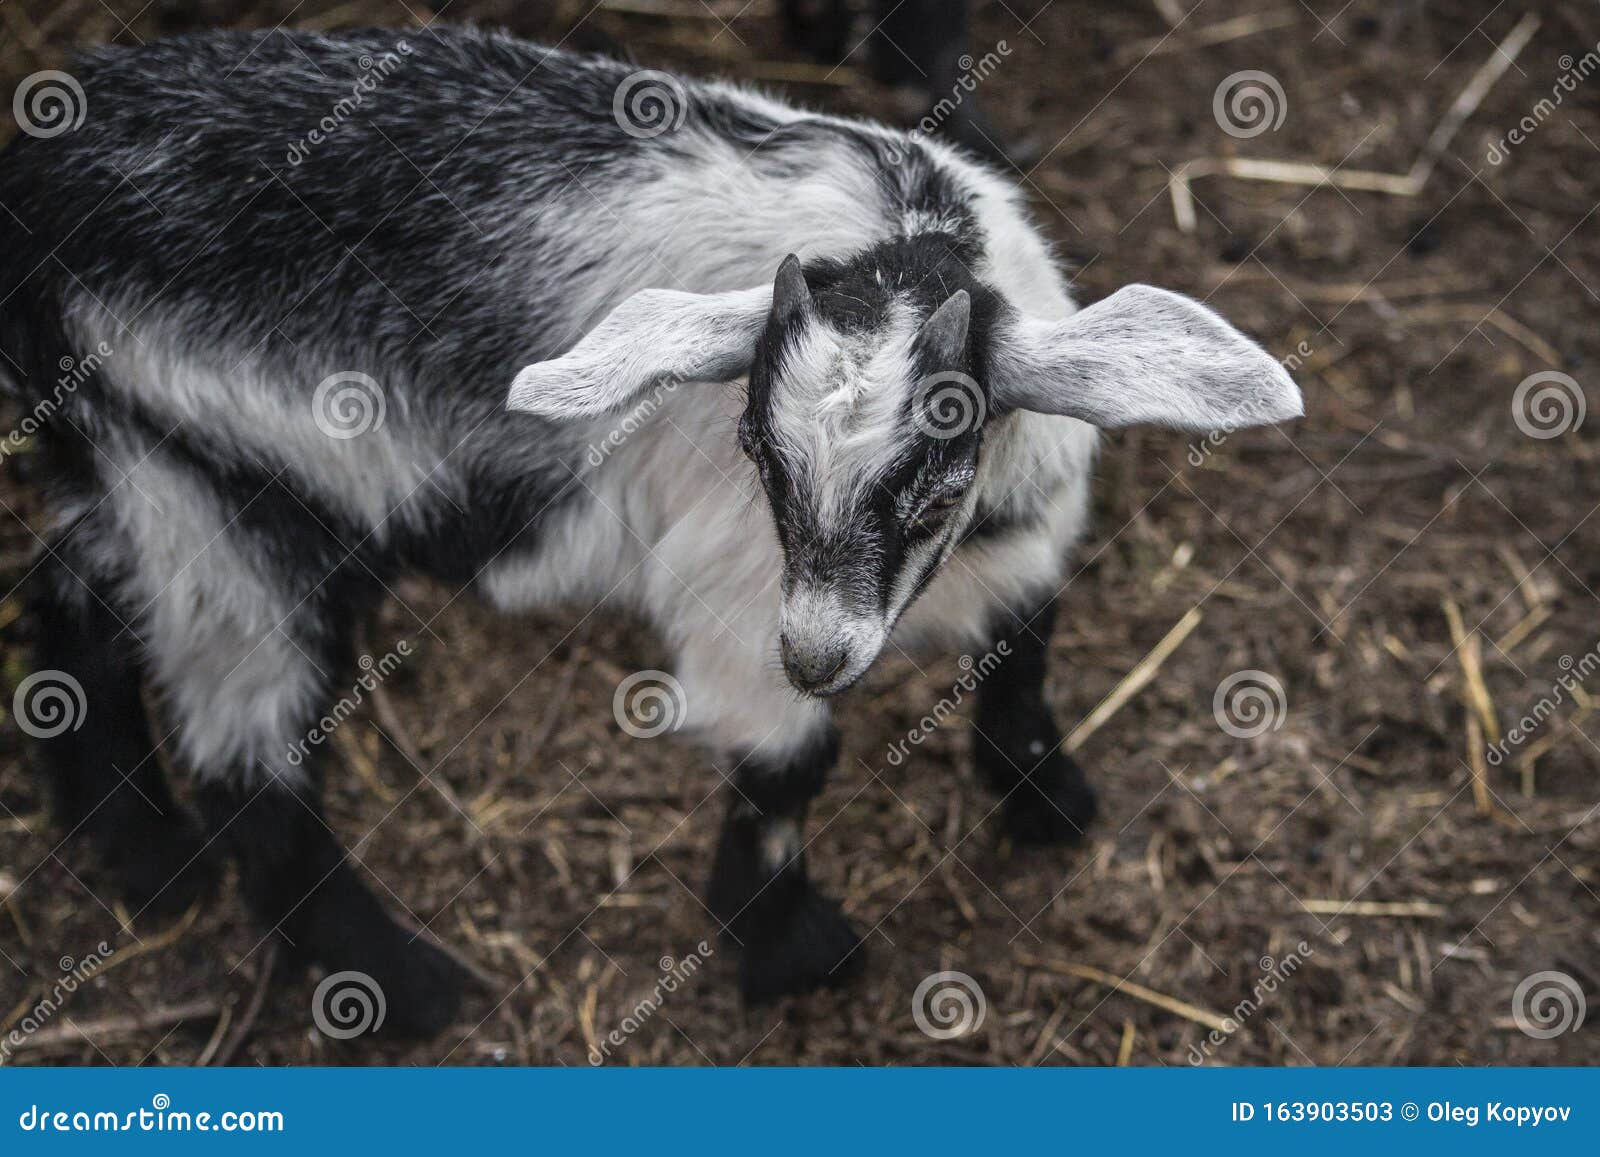 Turkish Hair Goat  Breed Profile  Backyard Goats